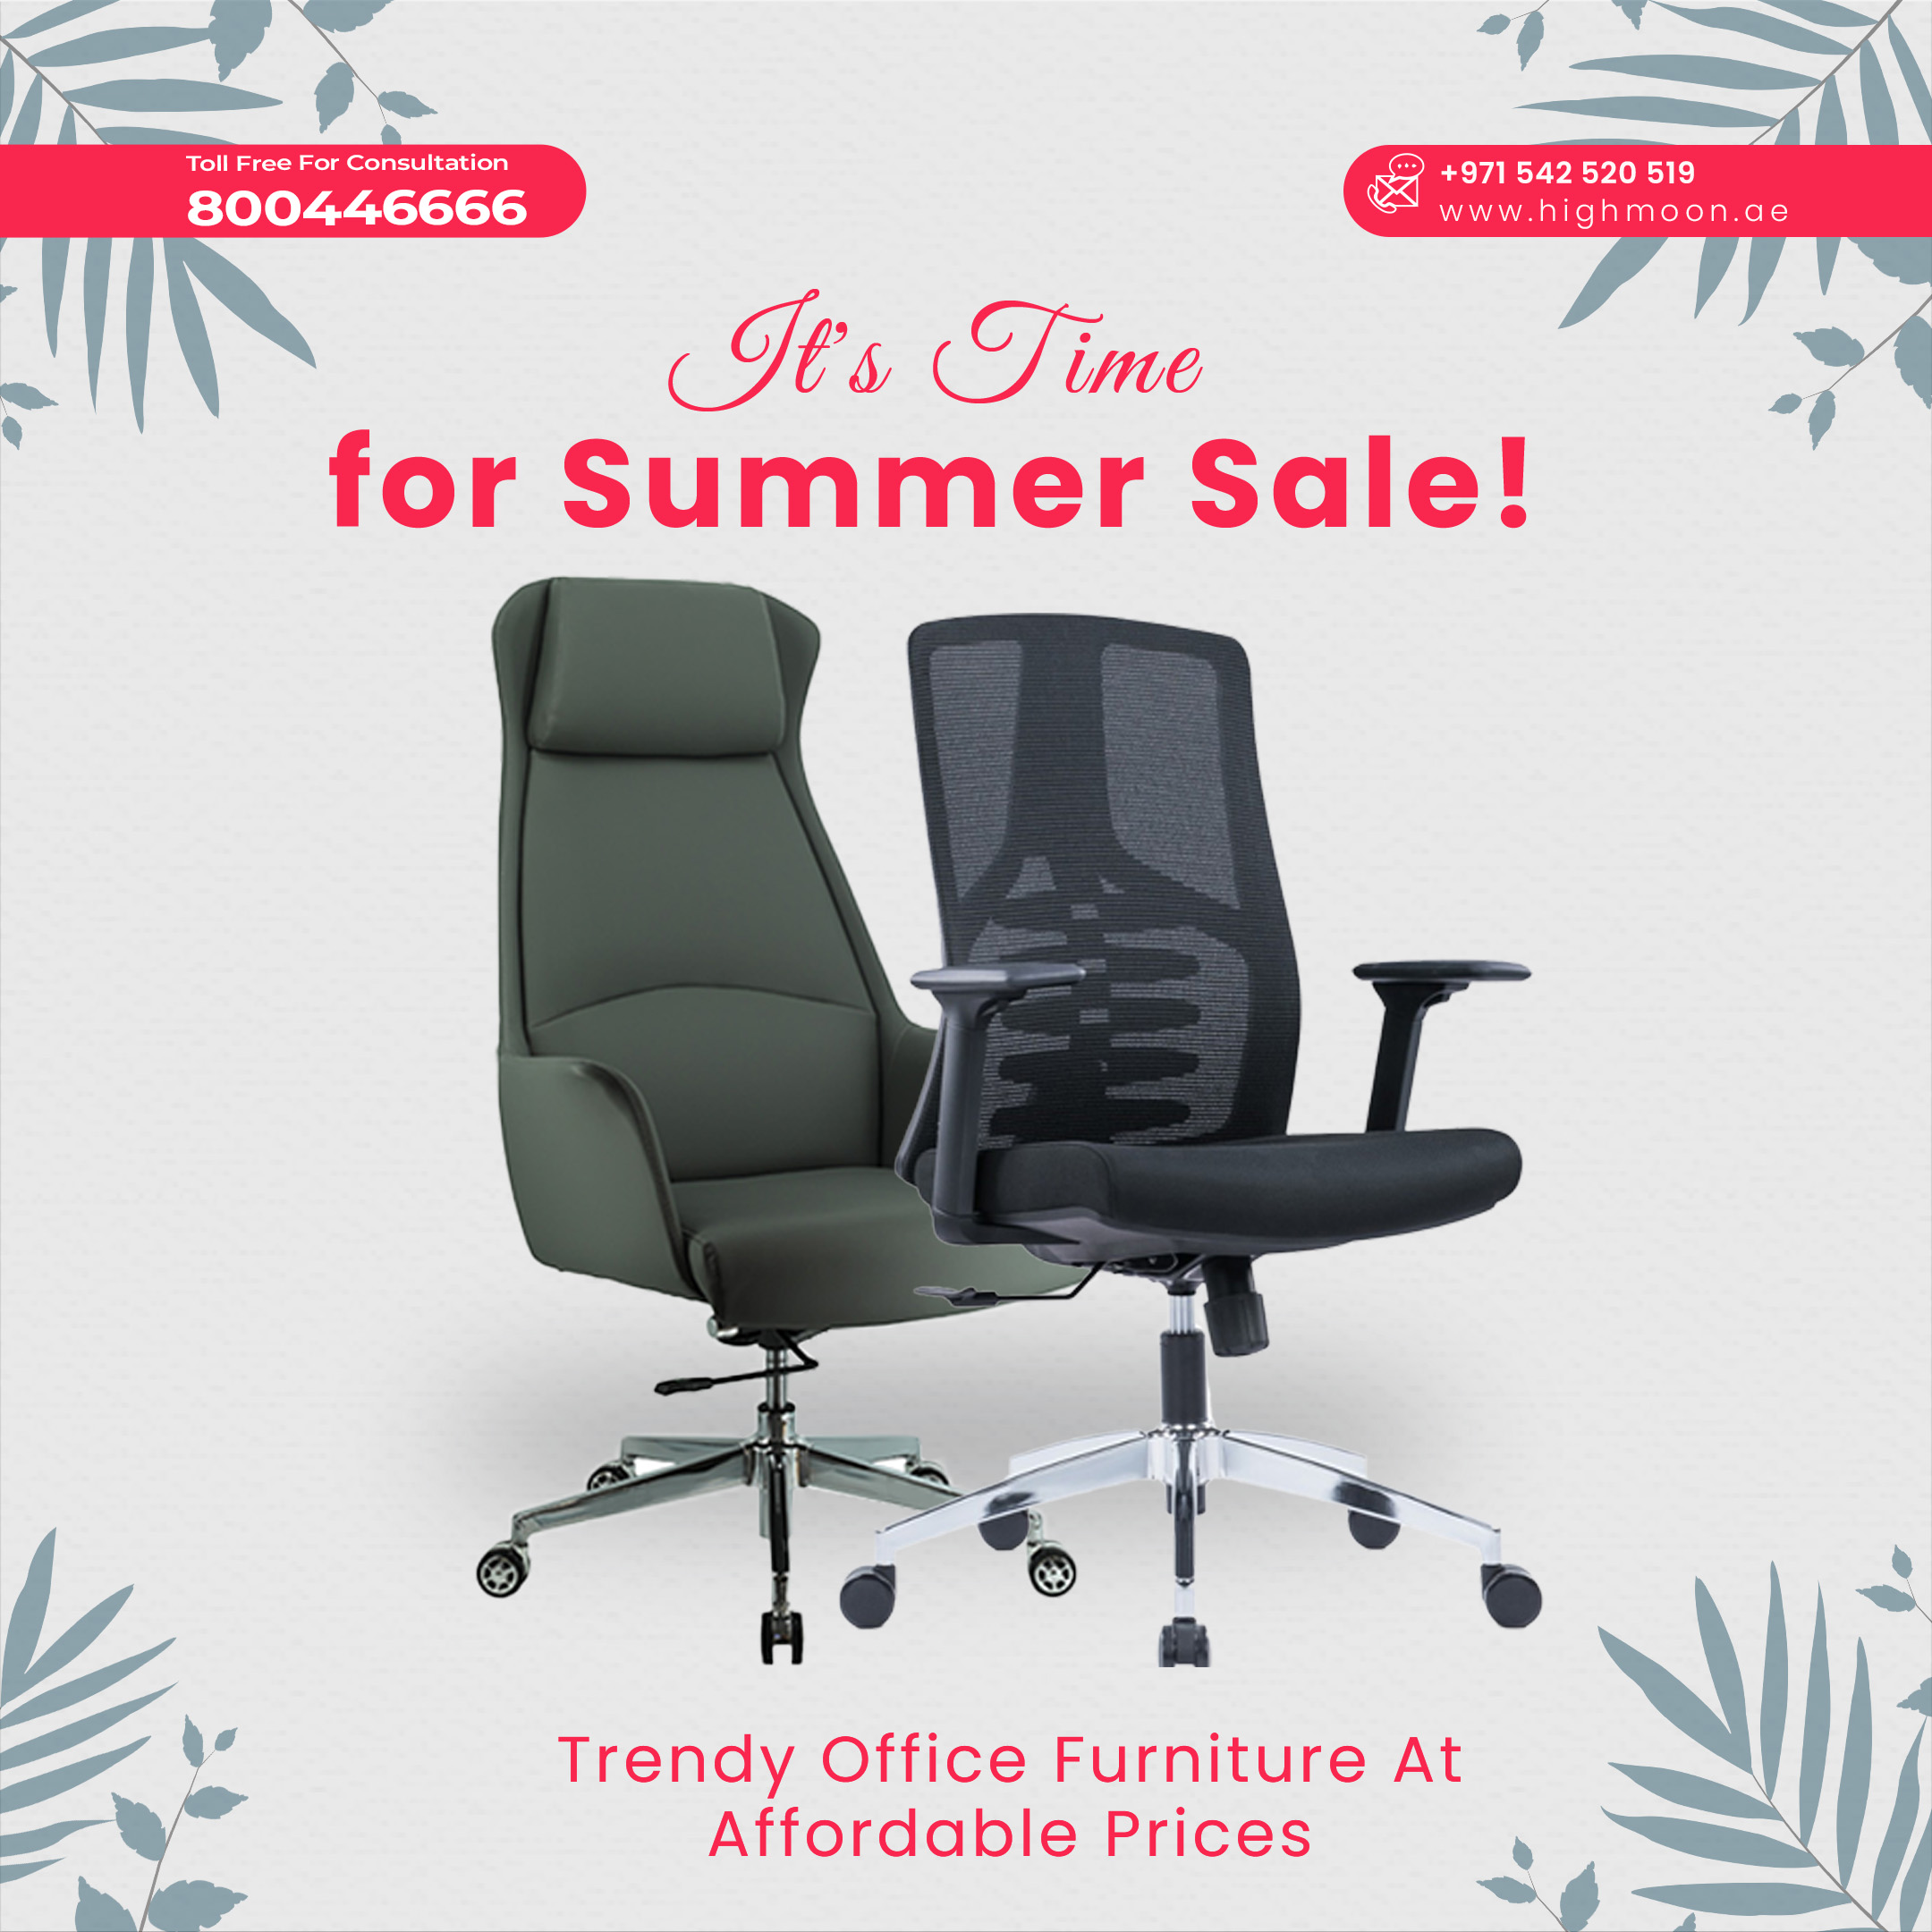 Summer-Sale-Alert-Best-Offers-on-High-quality-Office-Chairs-in-Dubai-UAE-highmoon.jpg